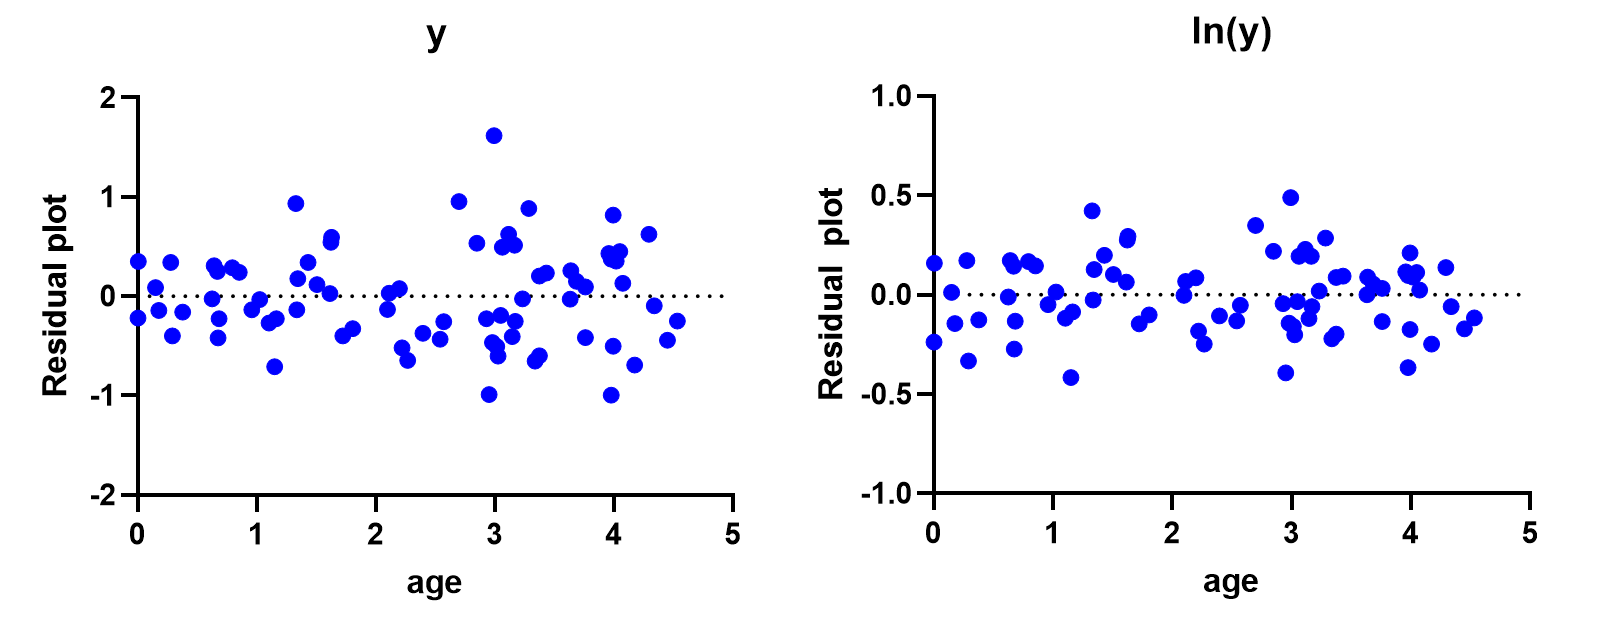 10 - Log Transform Comparison - Linear regression